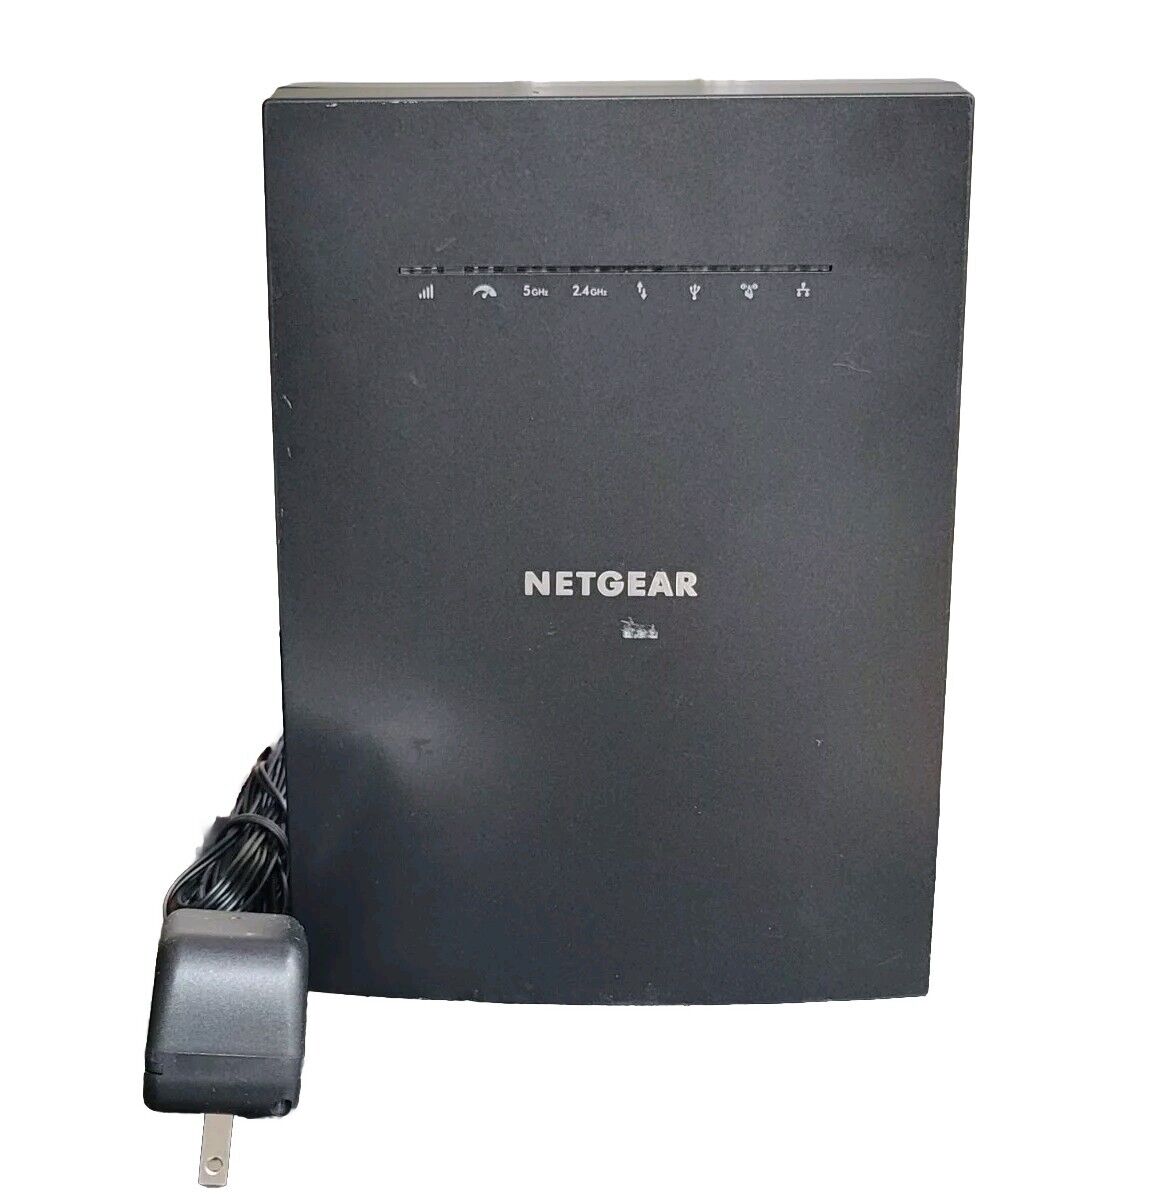 NETGEAR Nighthawk EX8000 X6S AC3000 Tri-band WiFi Mesh Extender- Used